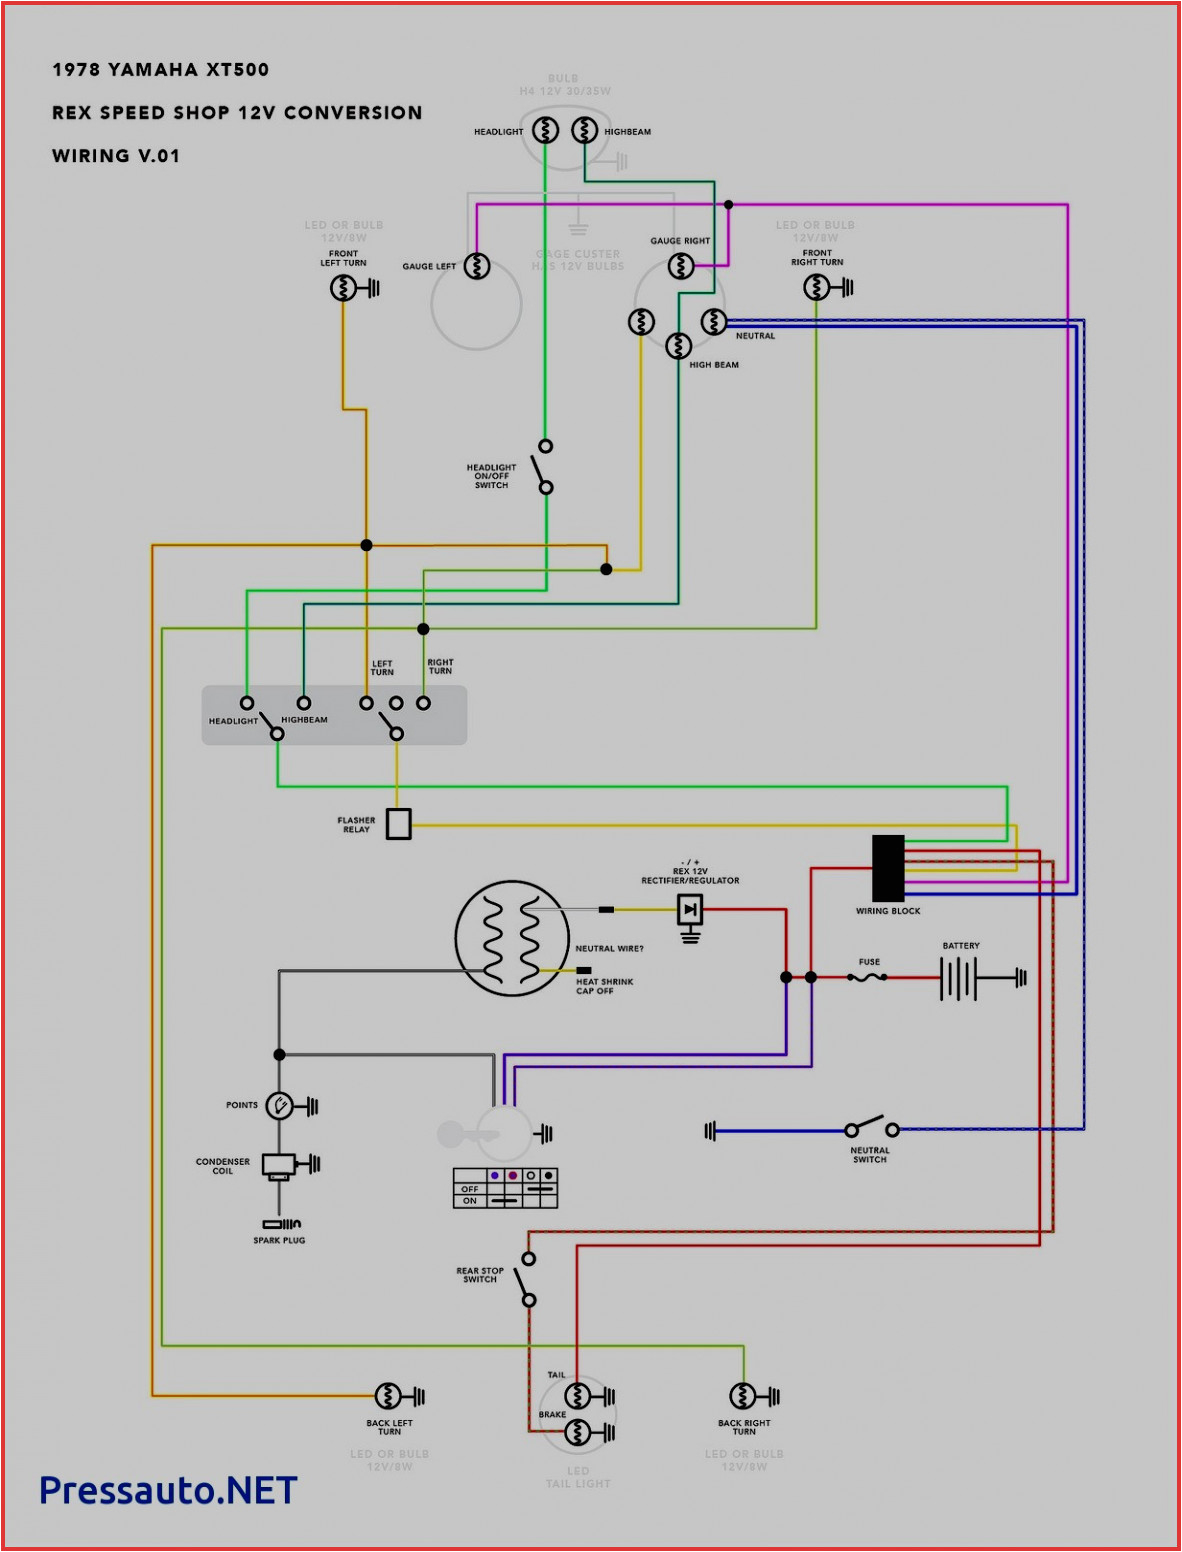 allis chalmers b wiring diagram allis chalmers b wiring diagram case 444 garden tractor wiring diagram web about wiring diagram e280a2 jpg